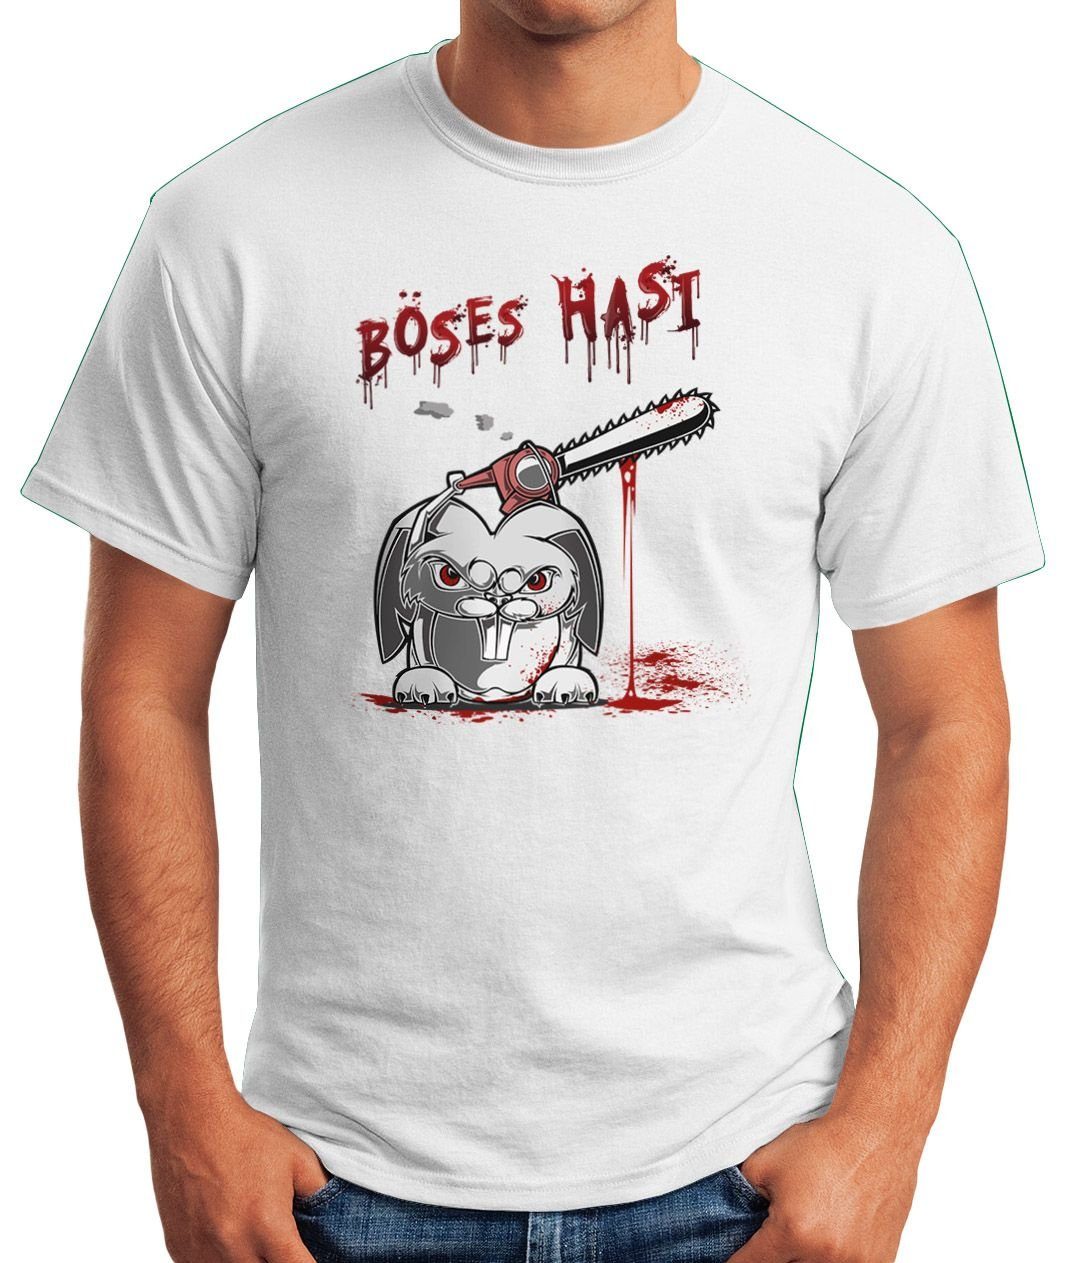 T-Shirt mit Fun-Shirt böses Moonworks® Hasi Horror Motiv Print-Shirt lustig Spruch Herren Parodie Print MoonWorks Kettensäge